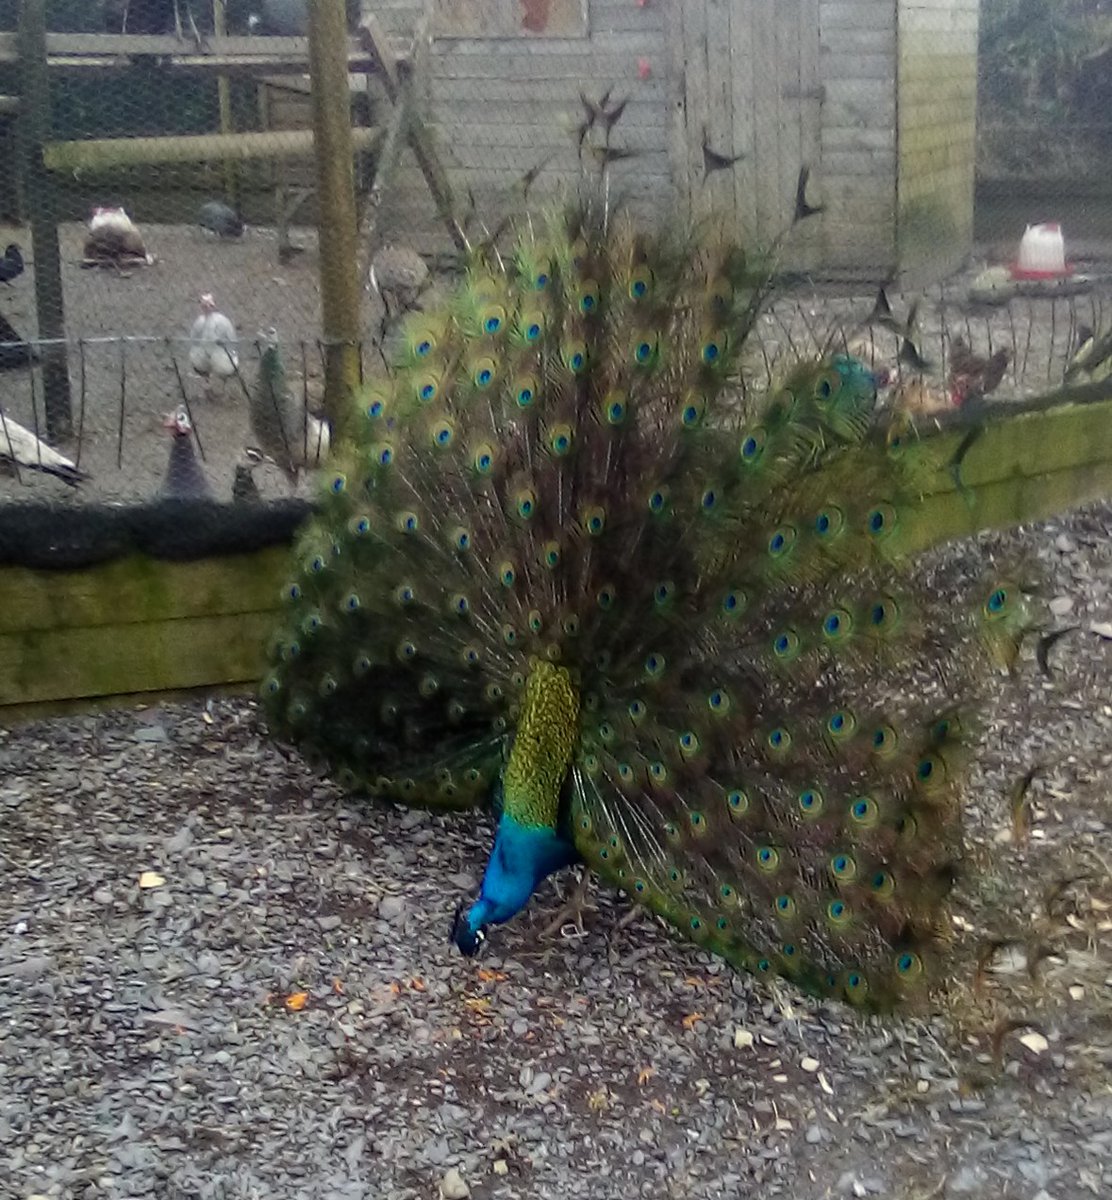 Peacock in garden having breakfast. # peacock #bird #BigGardenBirdWatch https://t.co/HVf4c4Rt6I